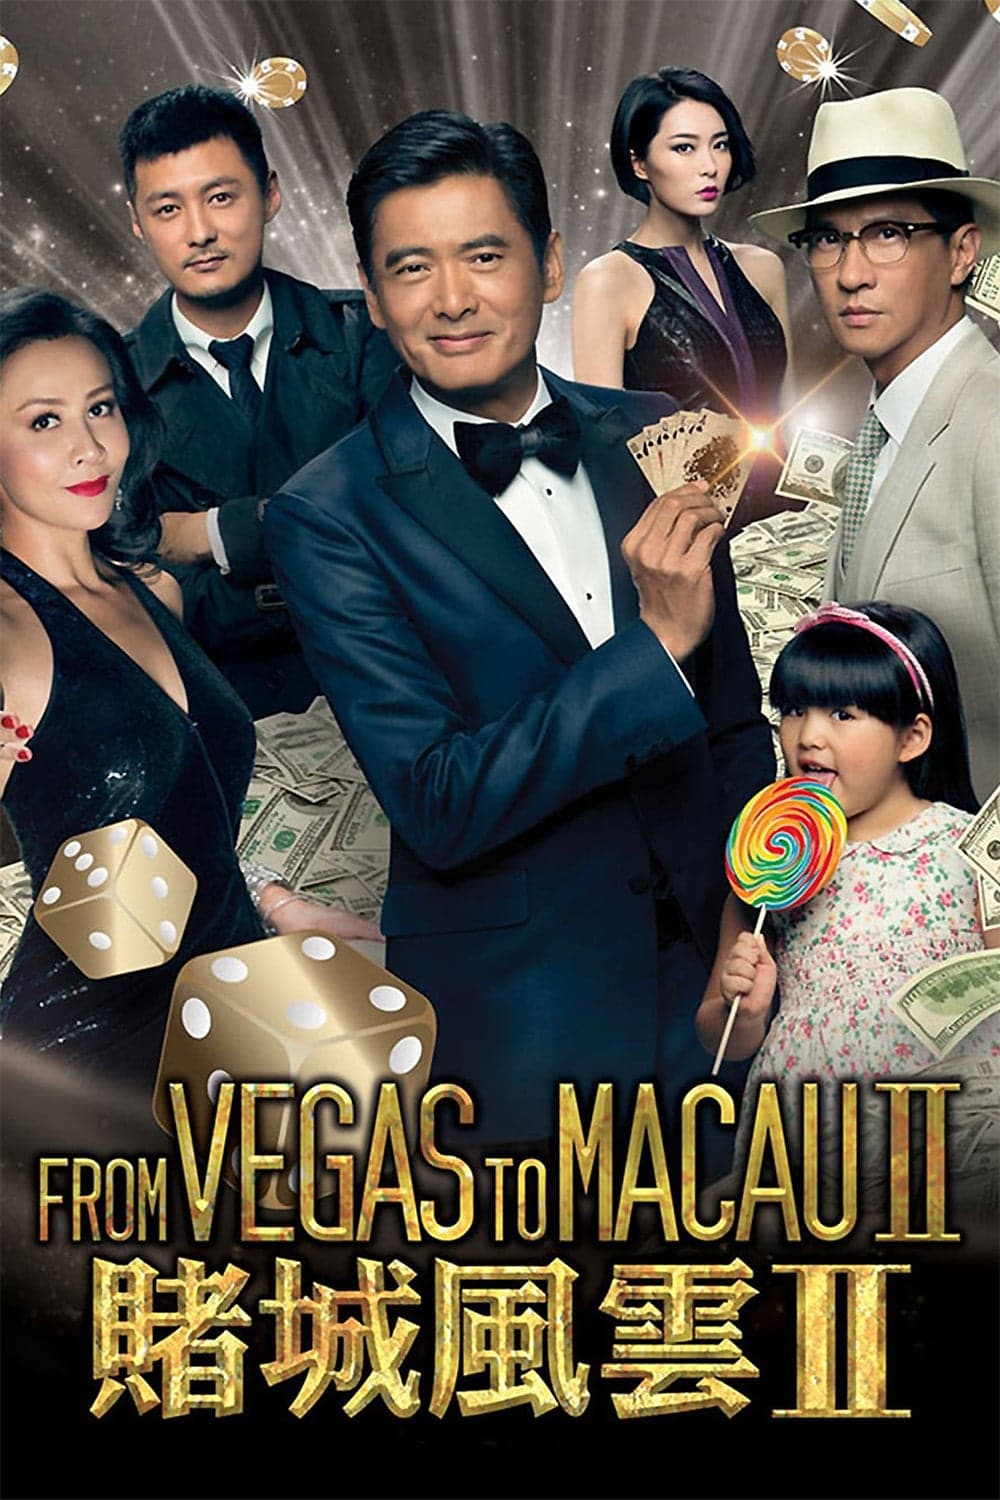 Plakat von "From Vegas to Macau II"